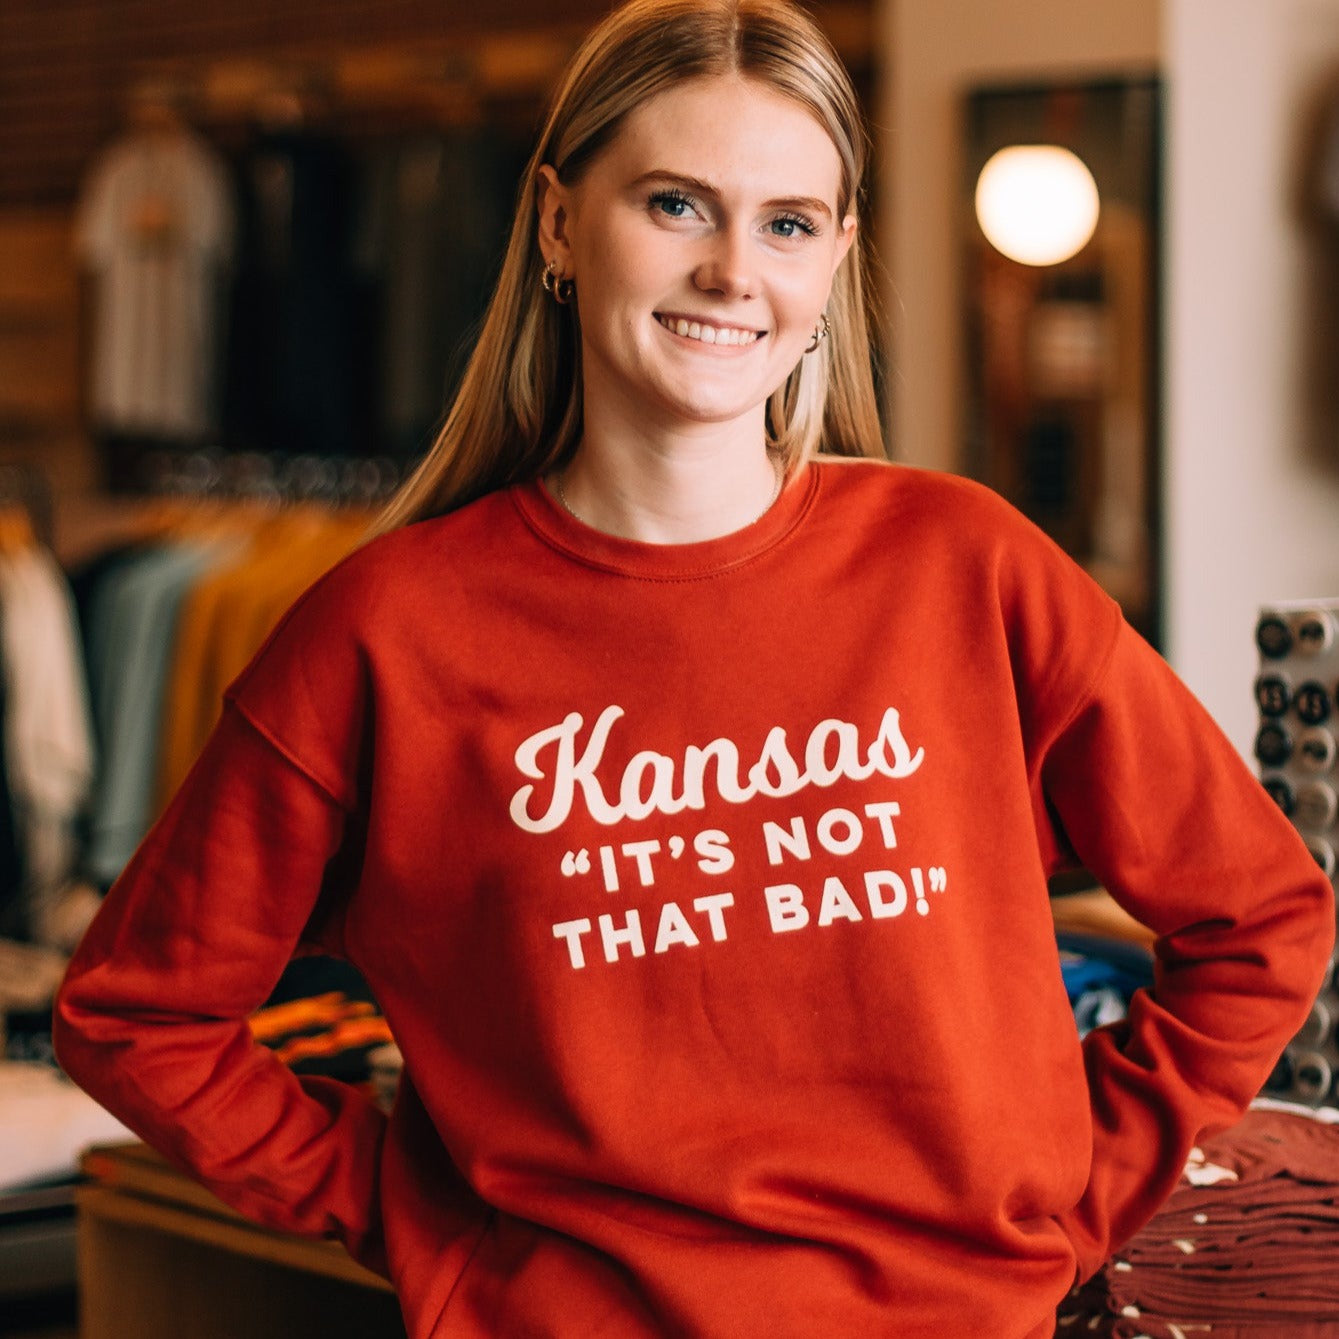 Kansas "It's Not that Bad!" Sweatshirt Brick